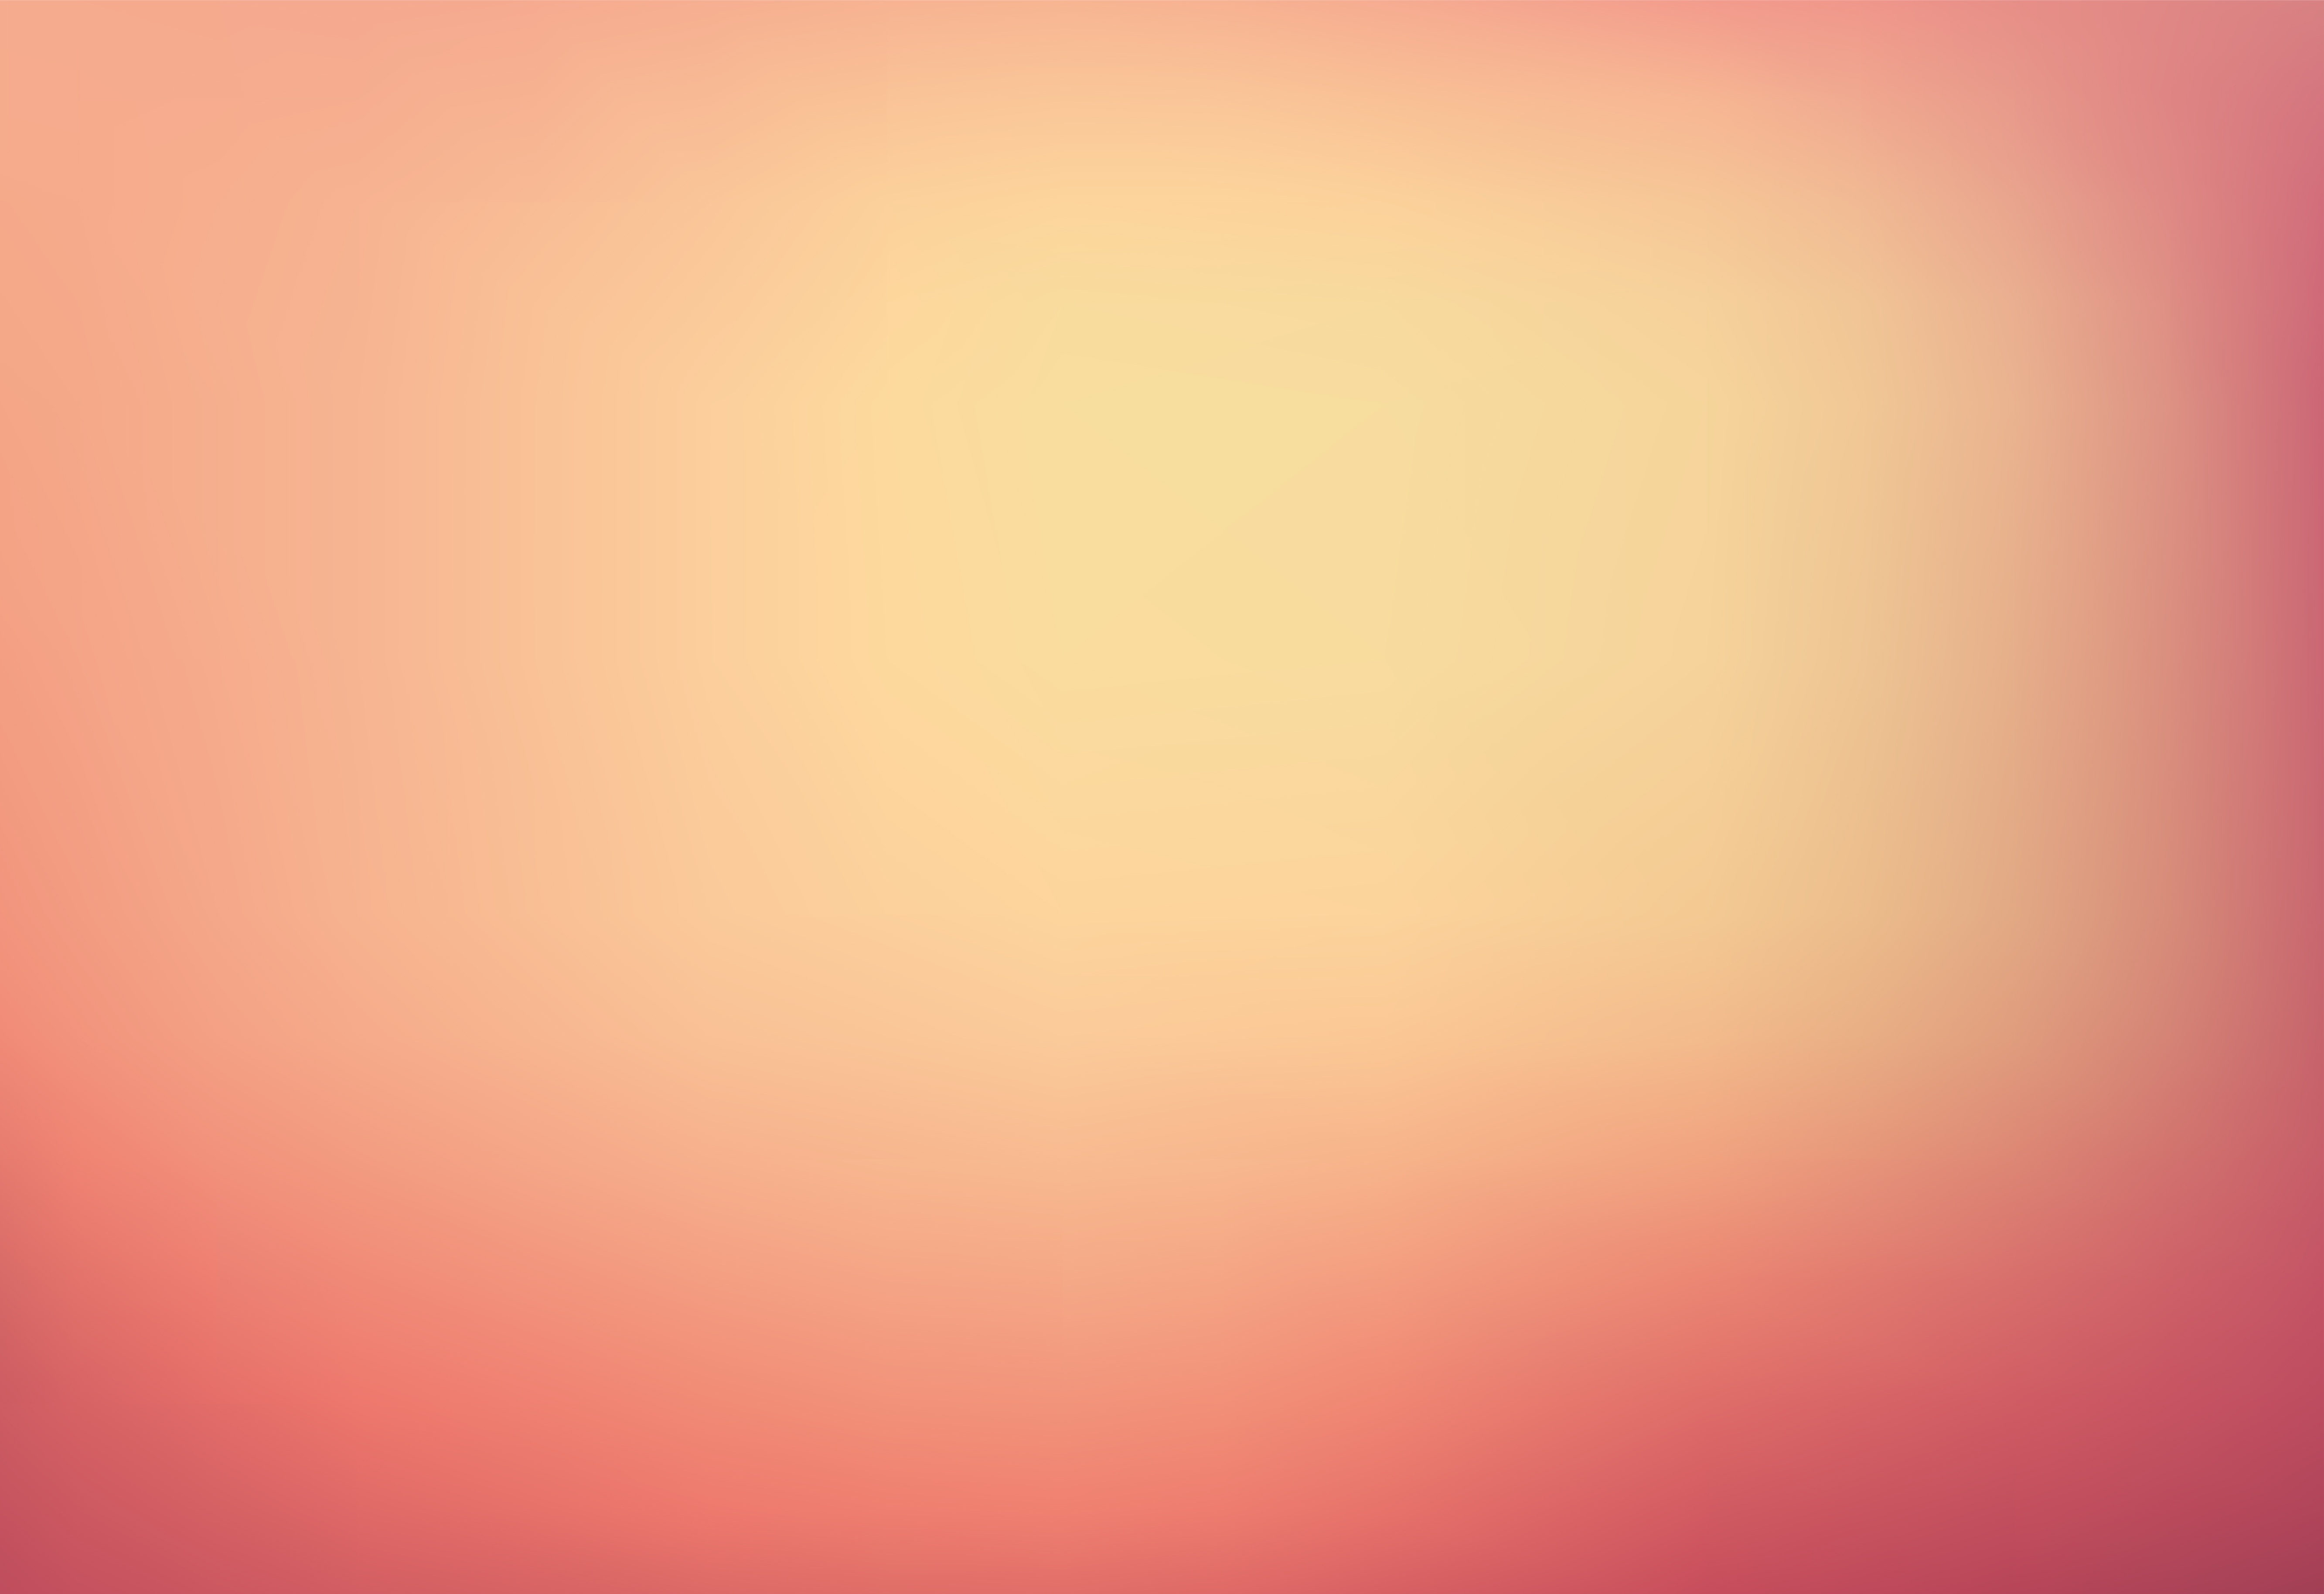 Cool HD Wallpaper color, pink, shades, texture